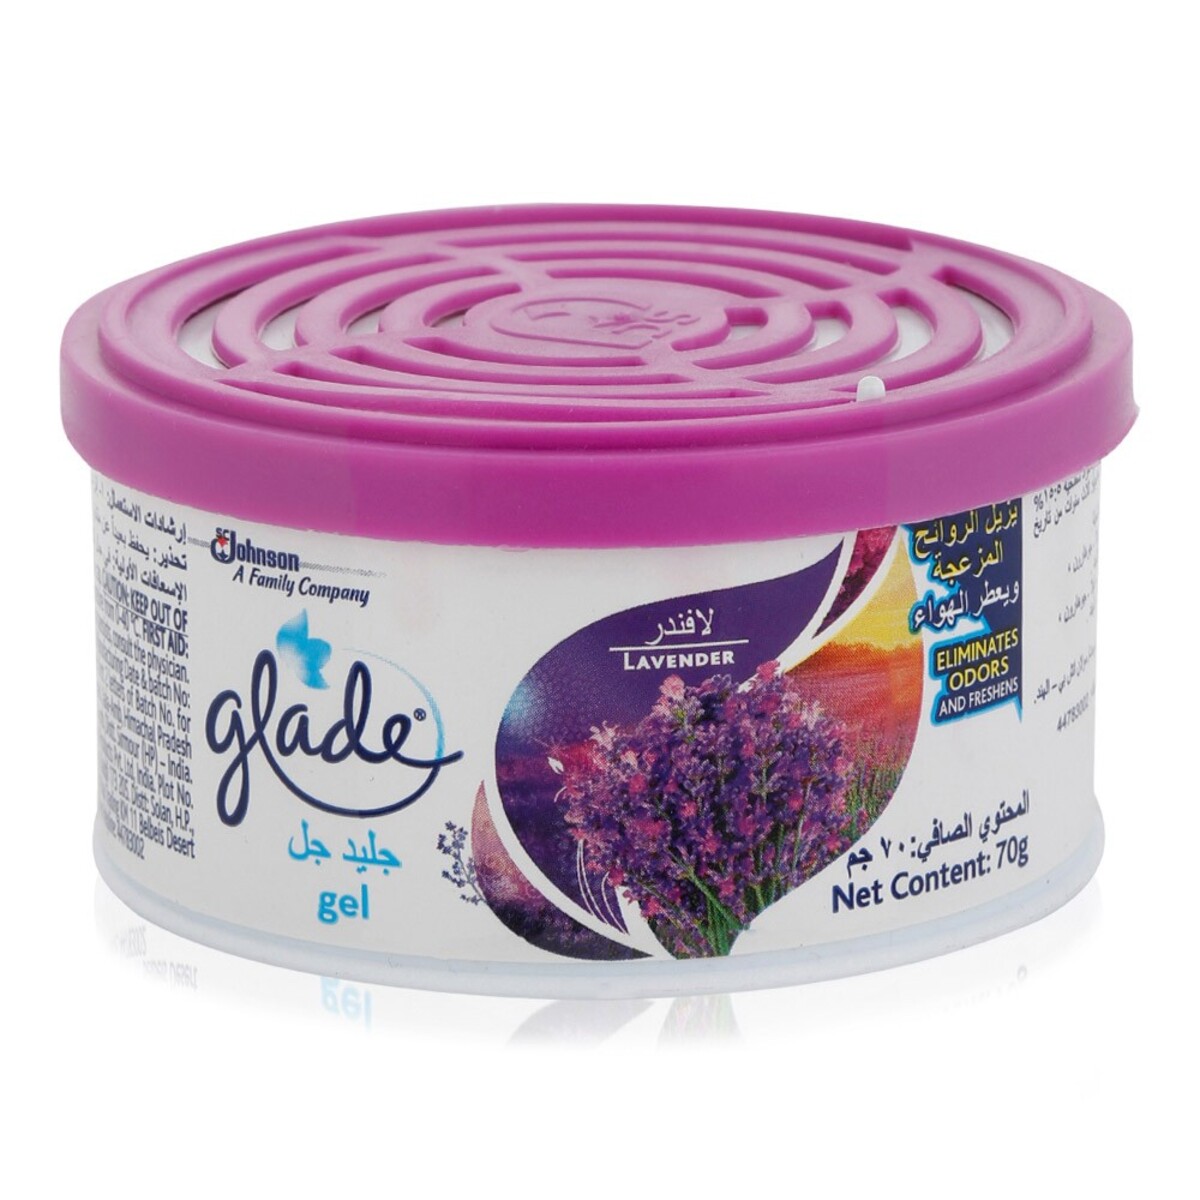 Glade Gel Air Fresh Lavender 70gm